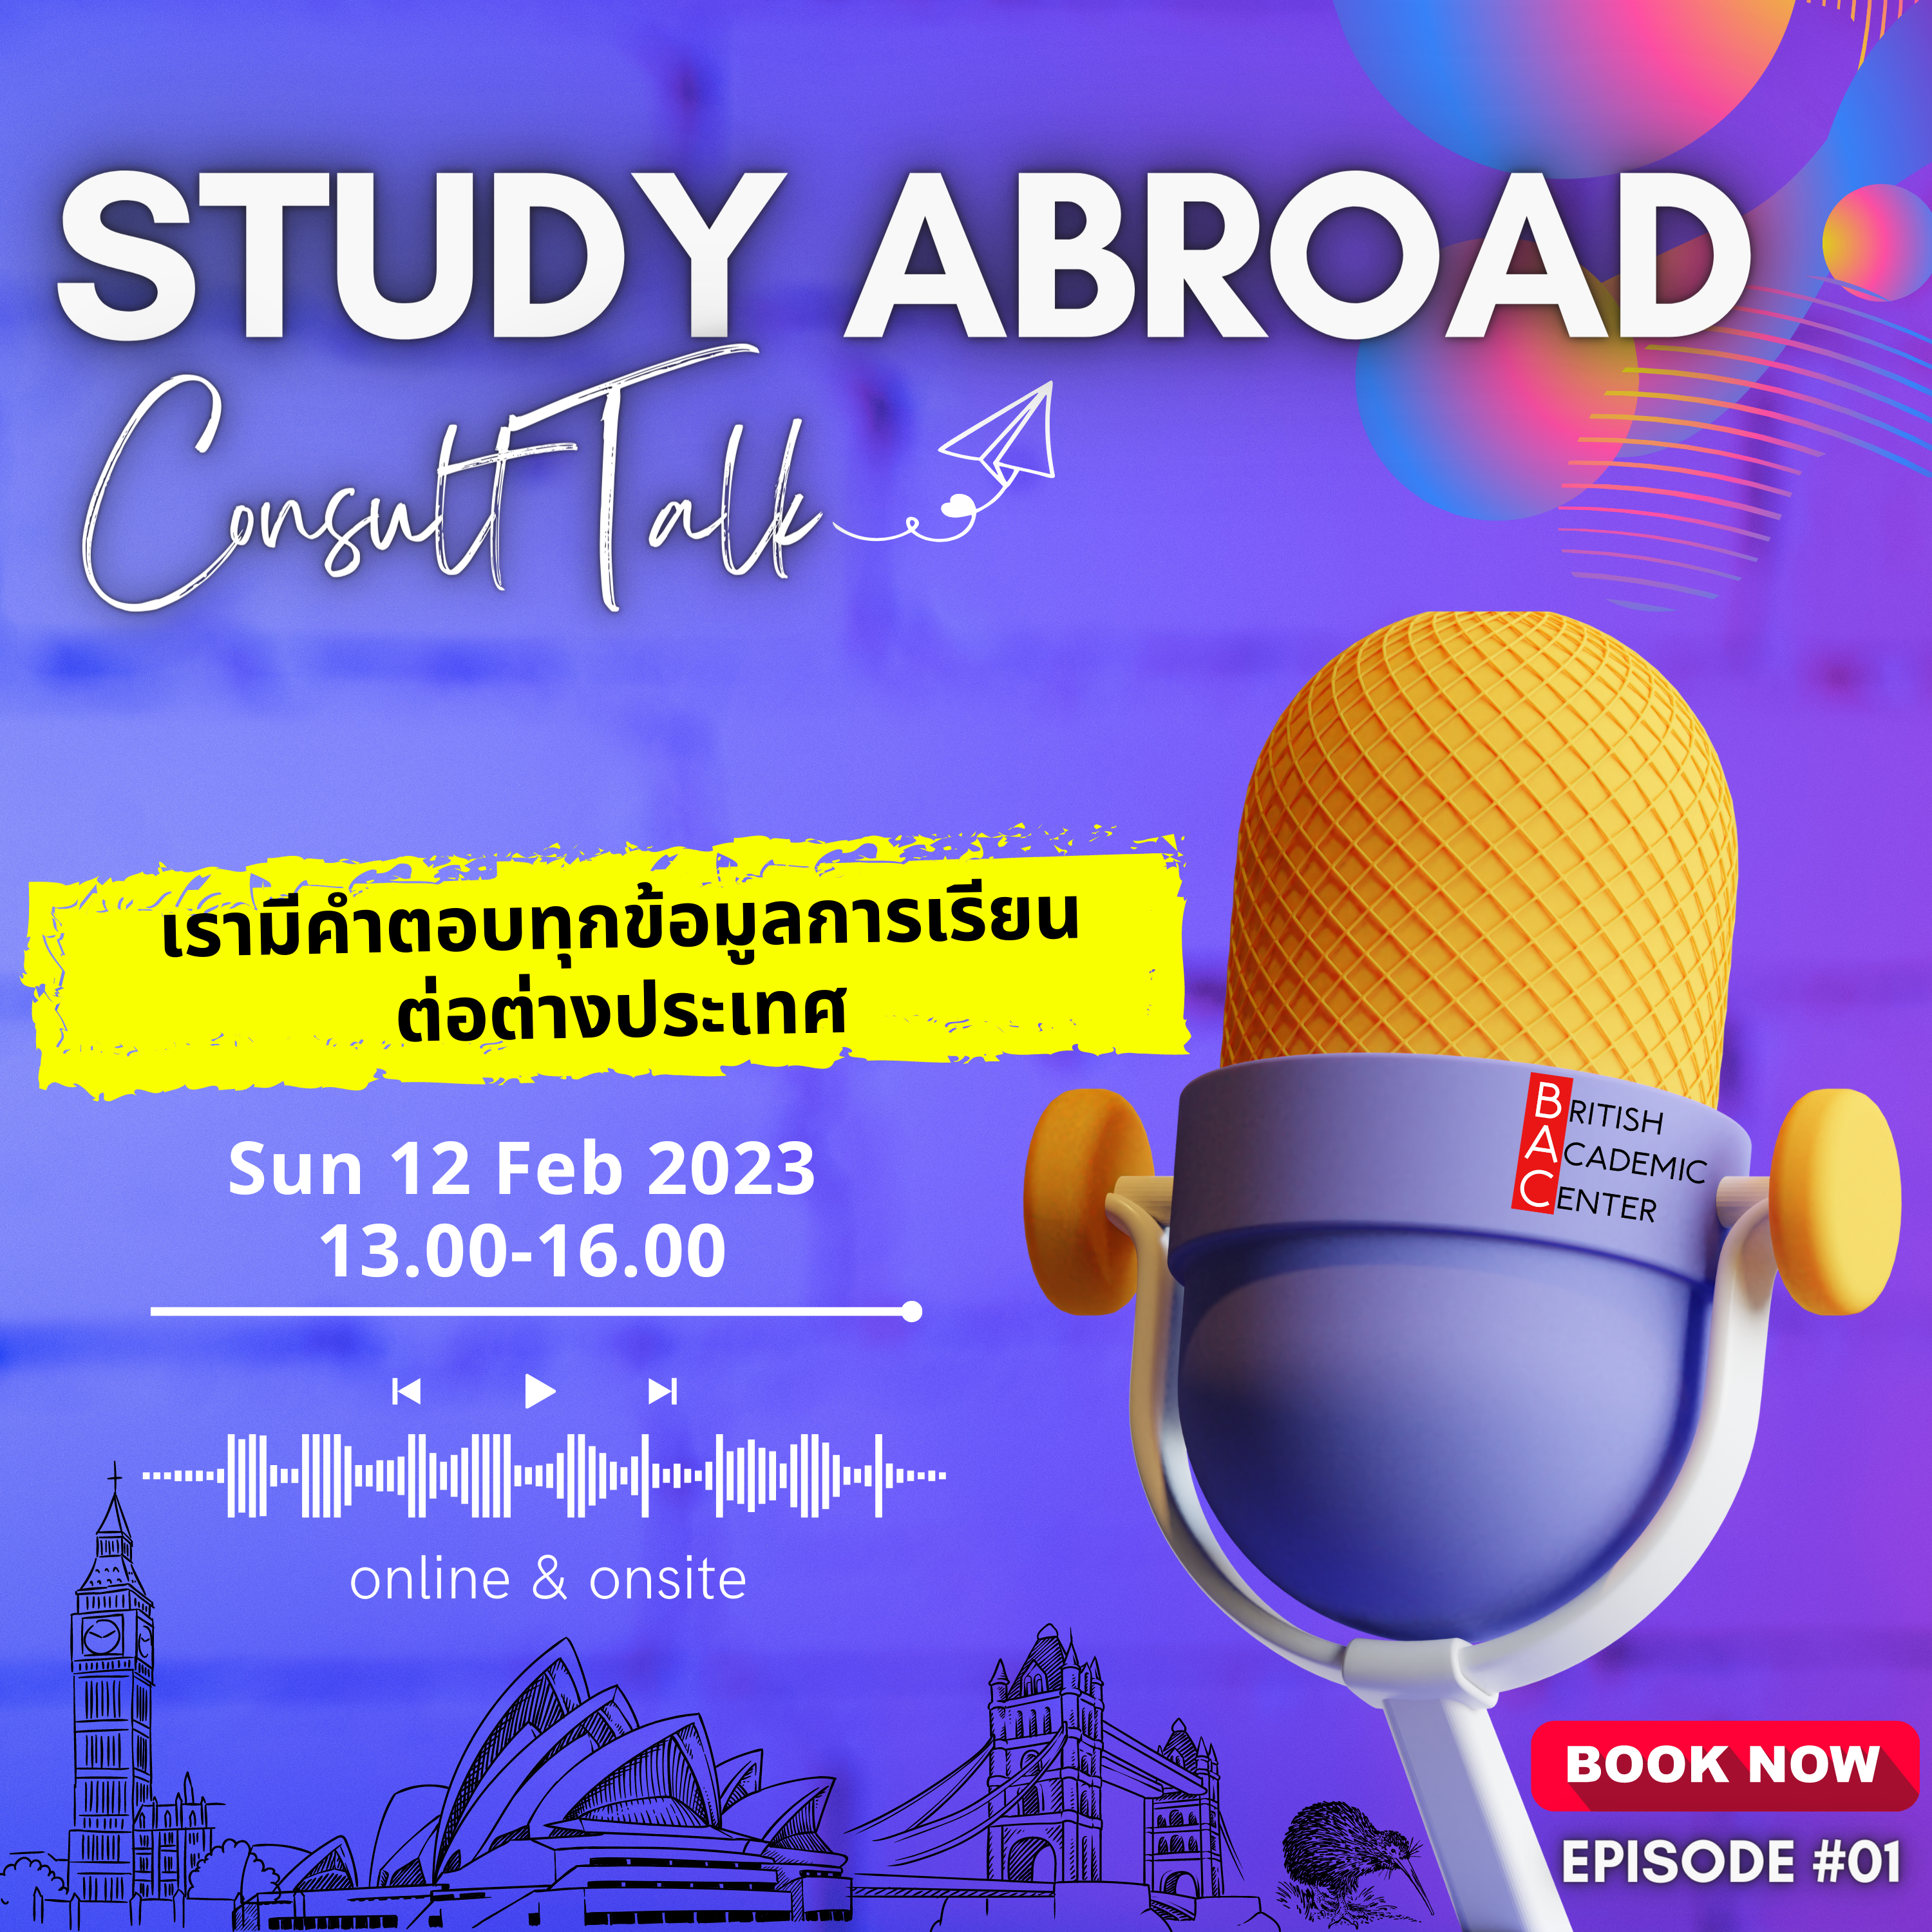 Study Abroad! Consult Talk!